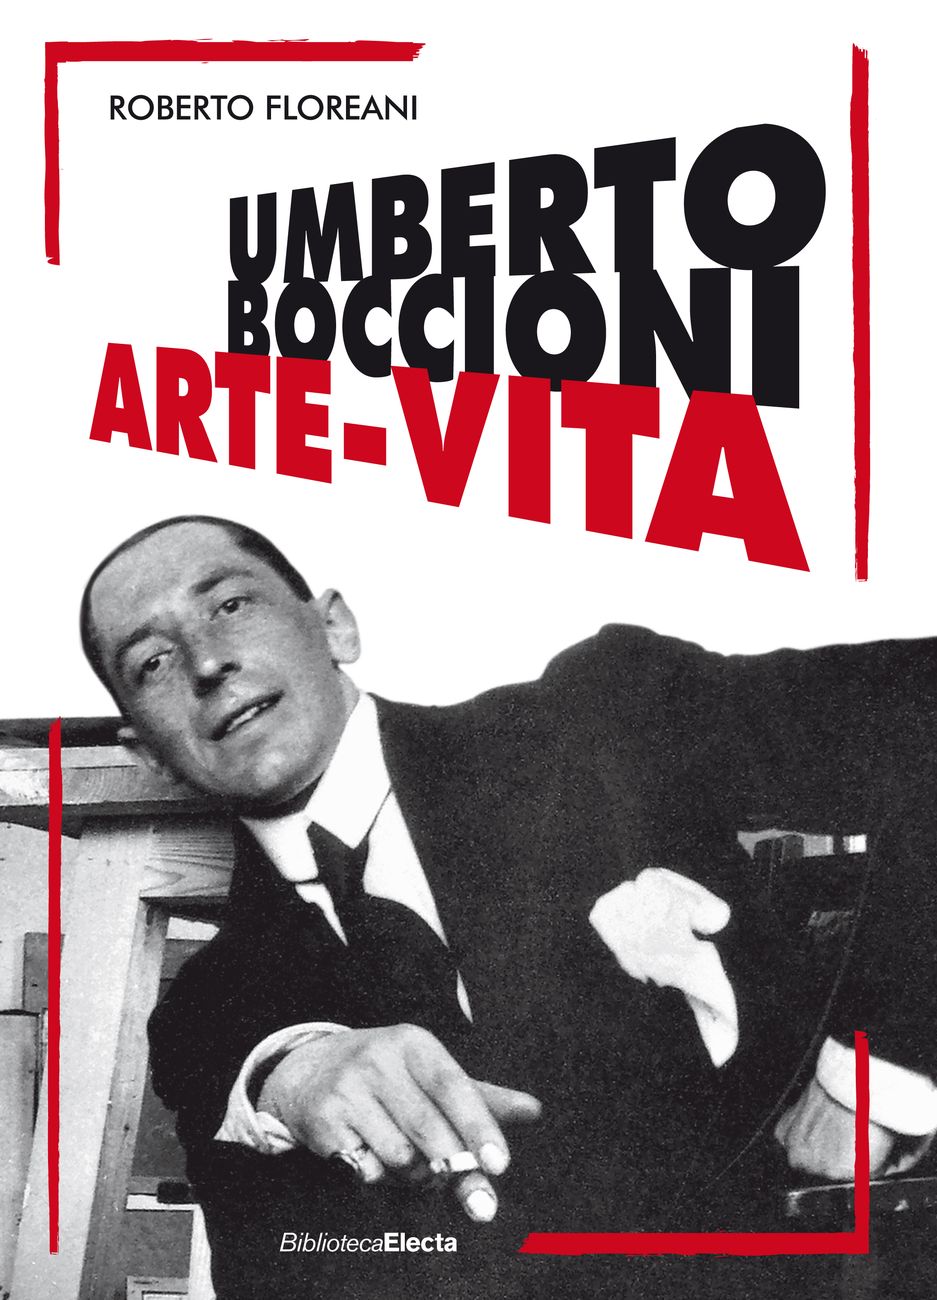 Roberto Floreani – Umberto Boccioni. Arte-vita (Electa, Milano 2017)